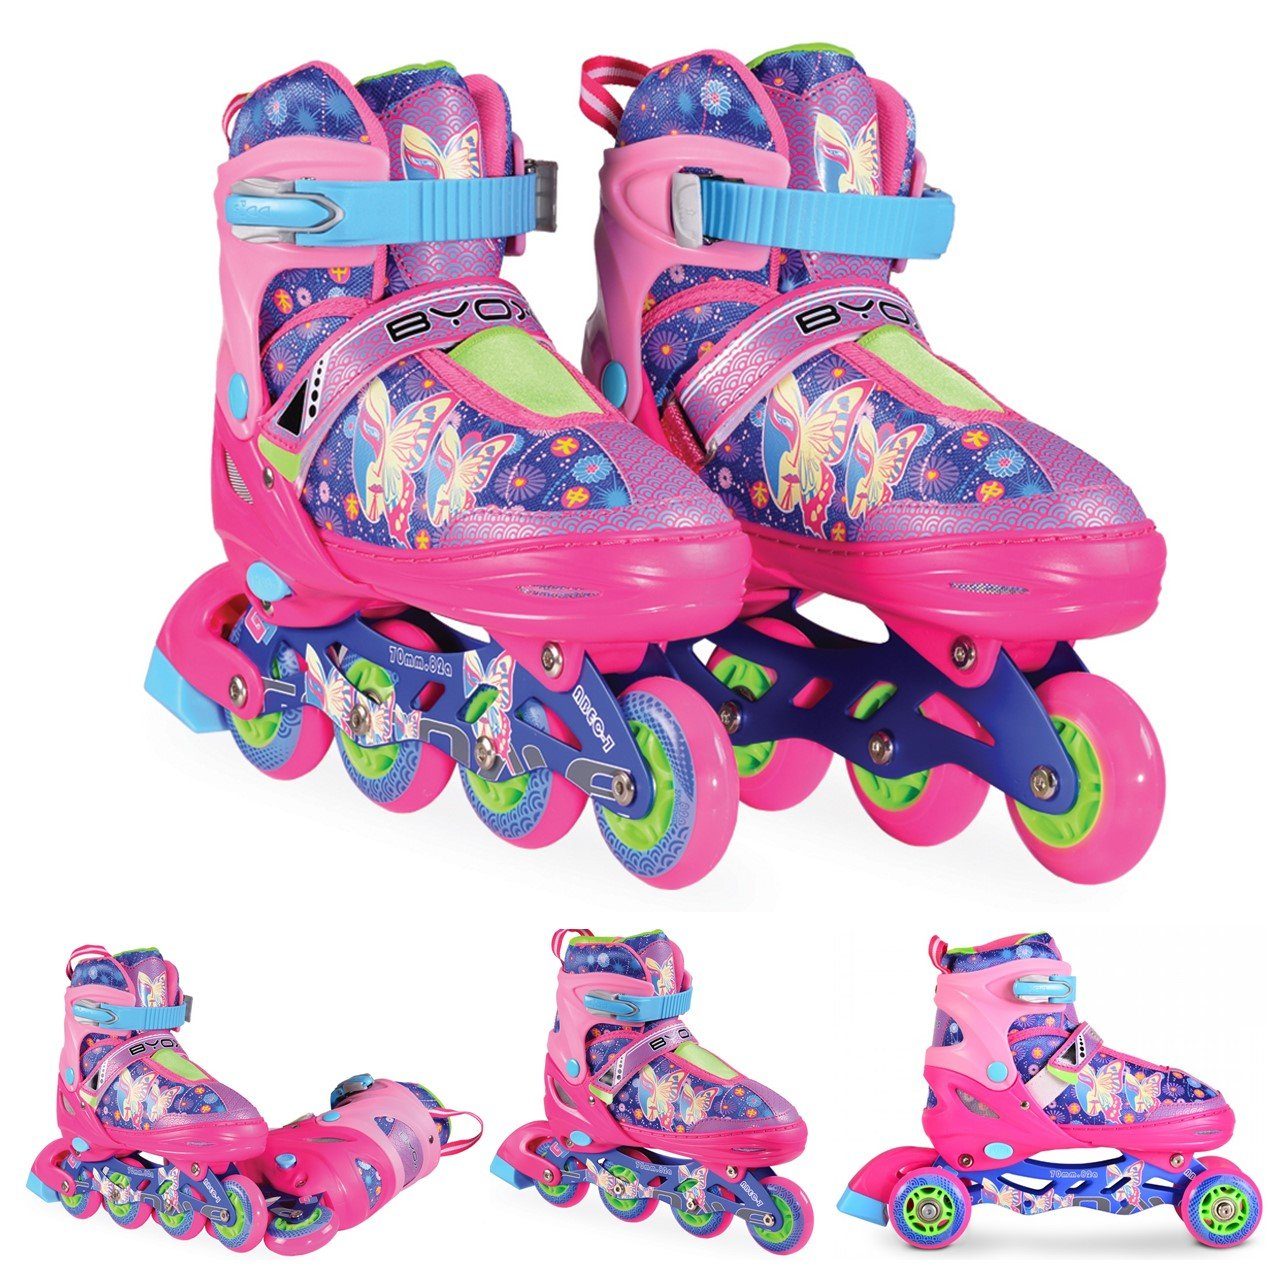 Kids Rollschuhe Rollerskates Inliner Roller Skates Kinderrollschuhe Verstellbar 